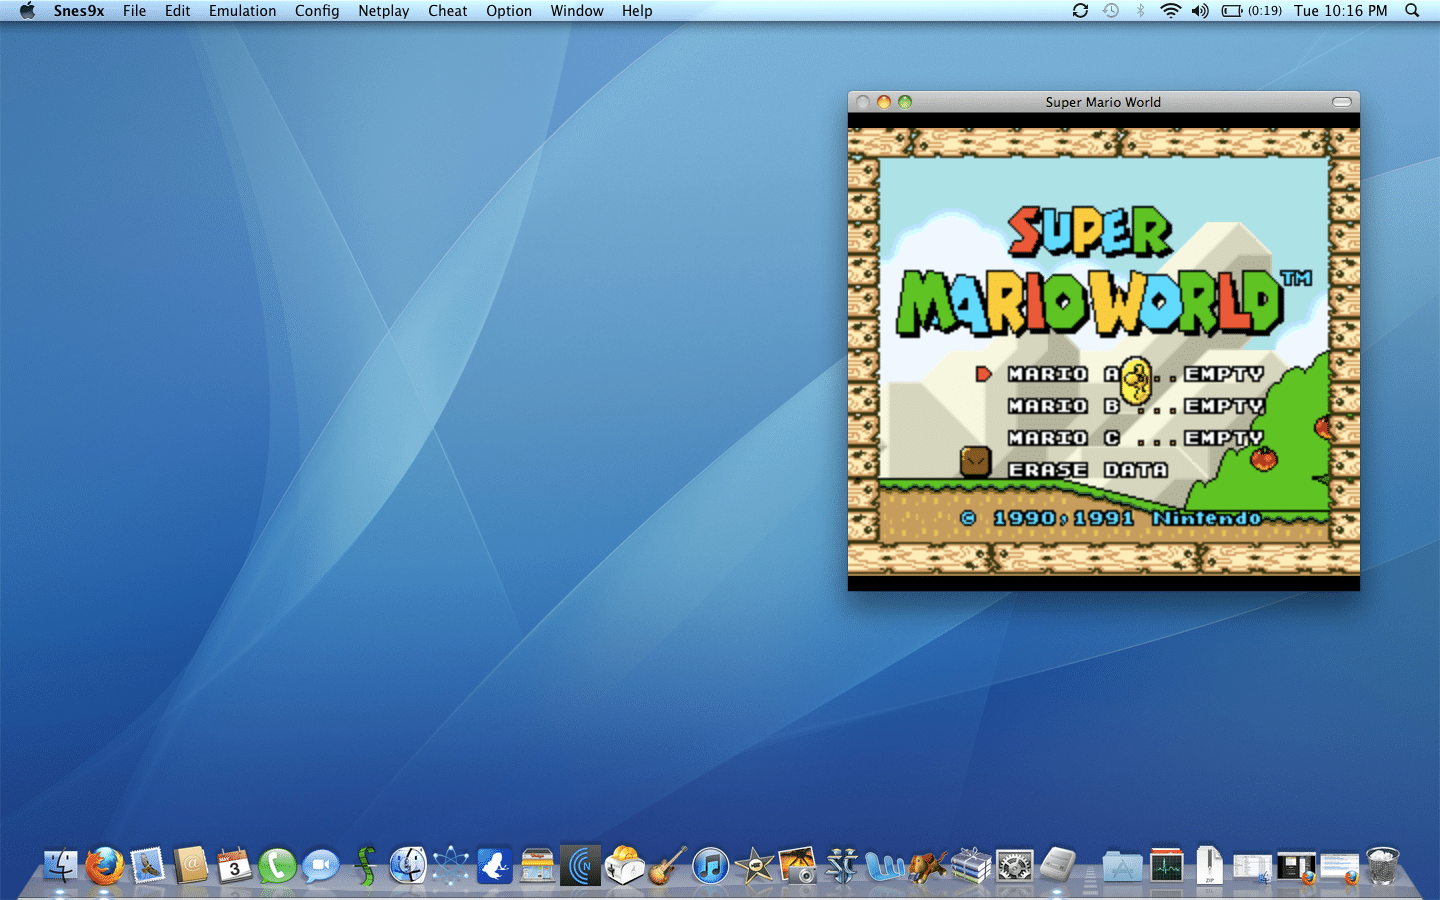 ps1 emulator games for mac